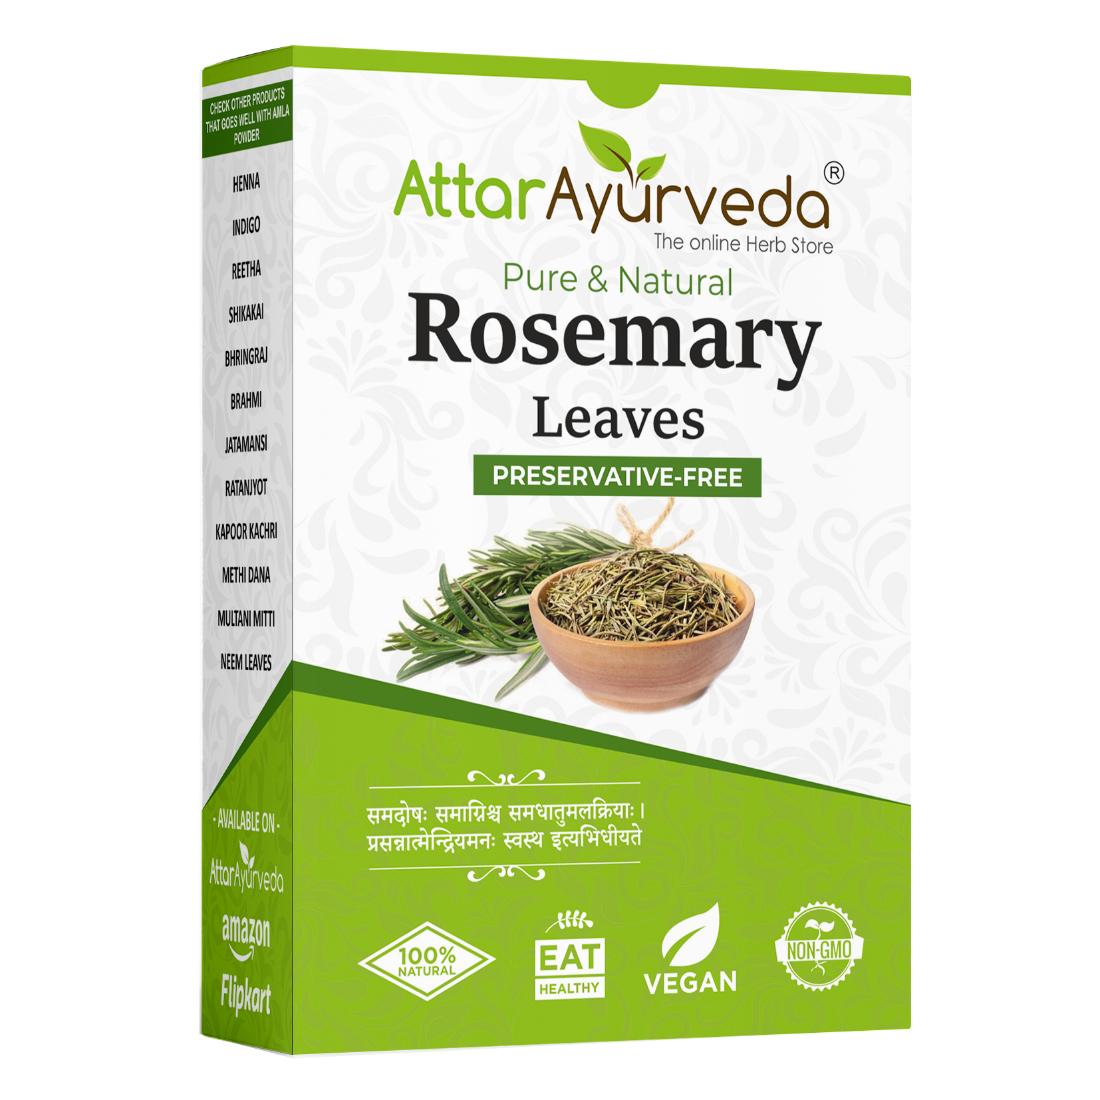 Attar Ayurveda Rosemary leaves dried